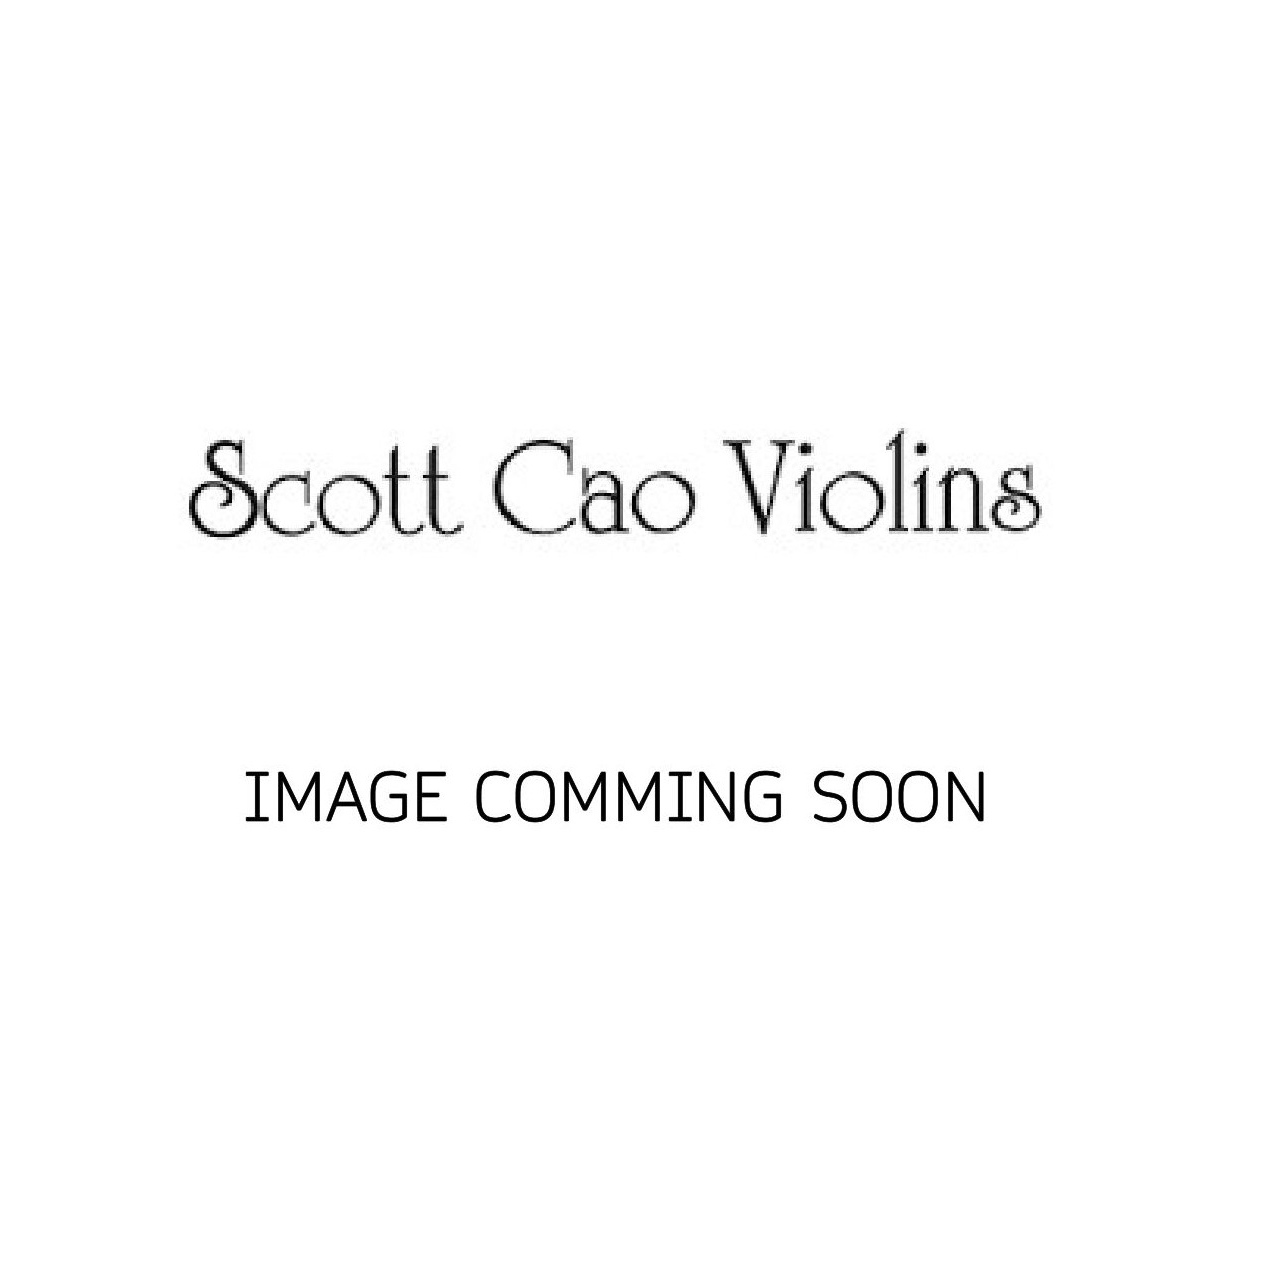 Scott Cao Cello 4/4 Davidov (750ES)